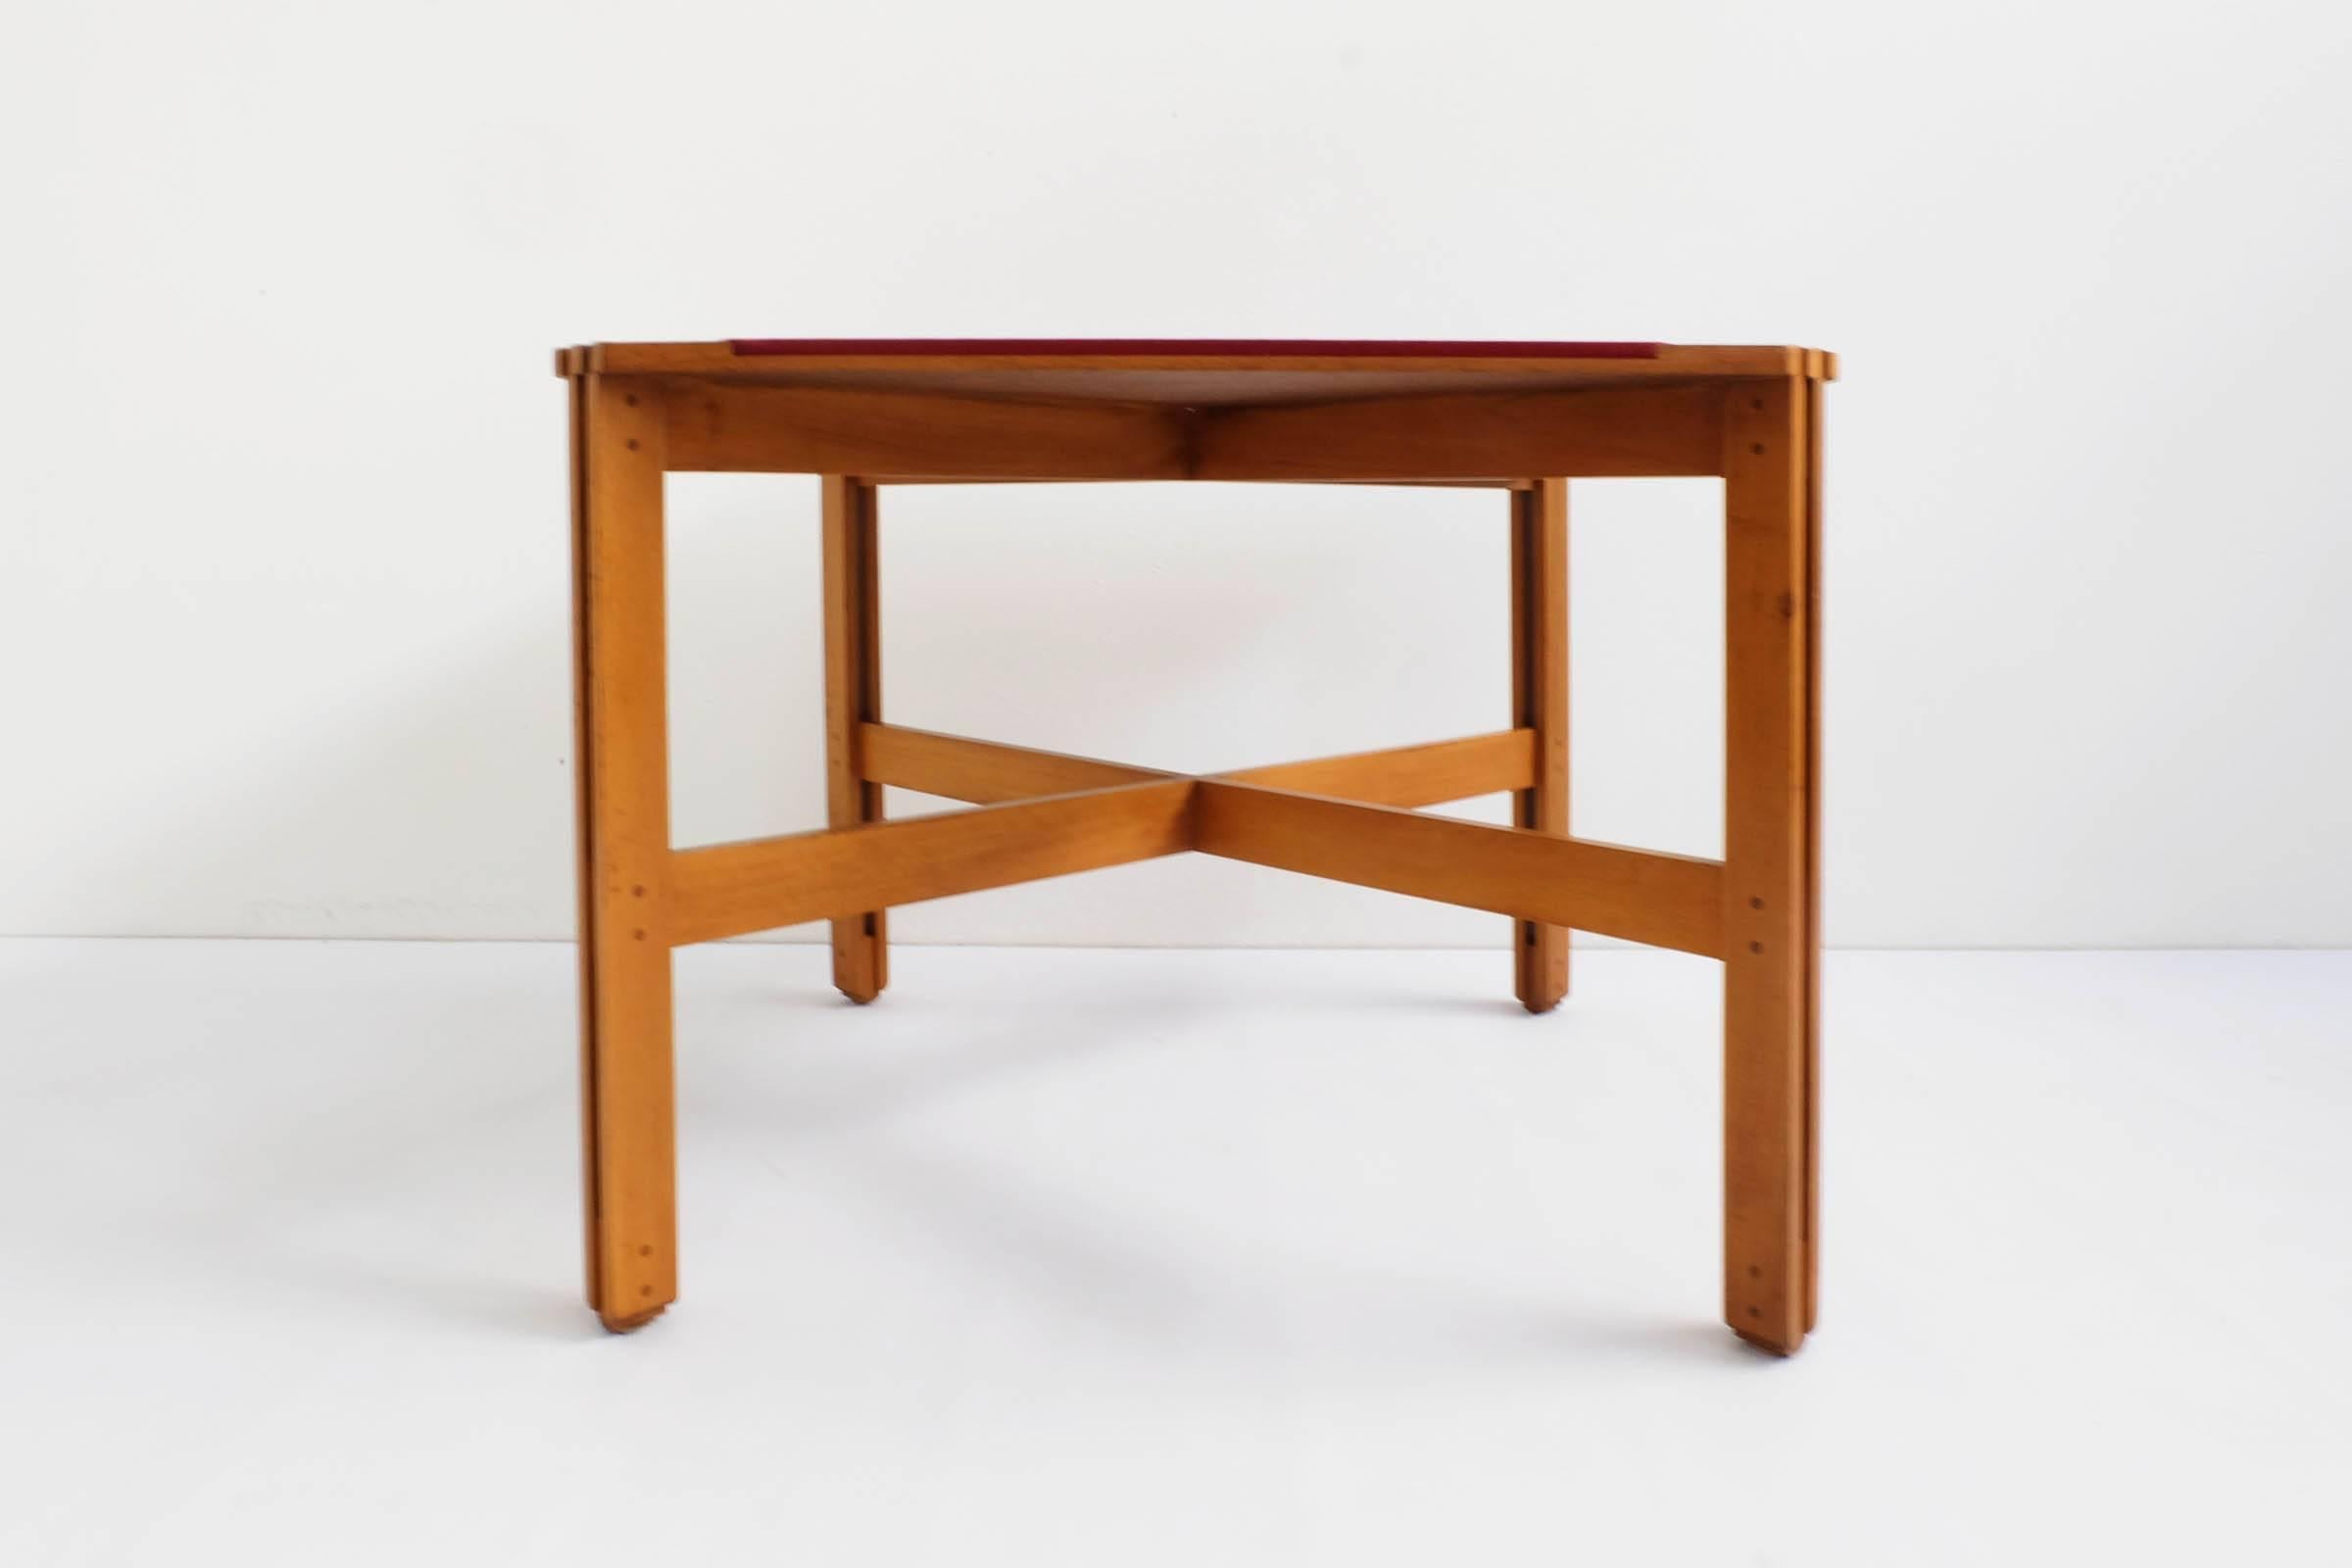 Fabric Ico Parisi Rare Square Table Mod. 753/2, Italy, 1962